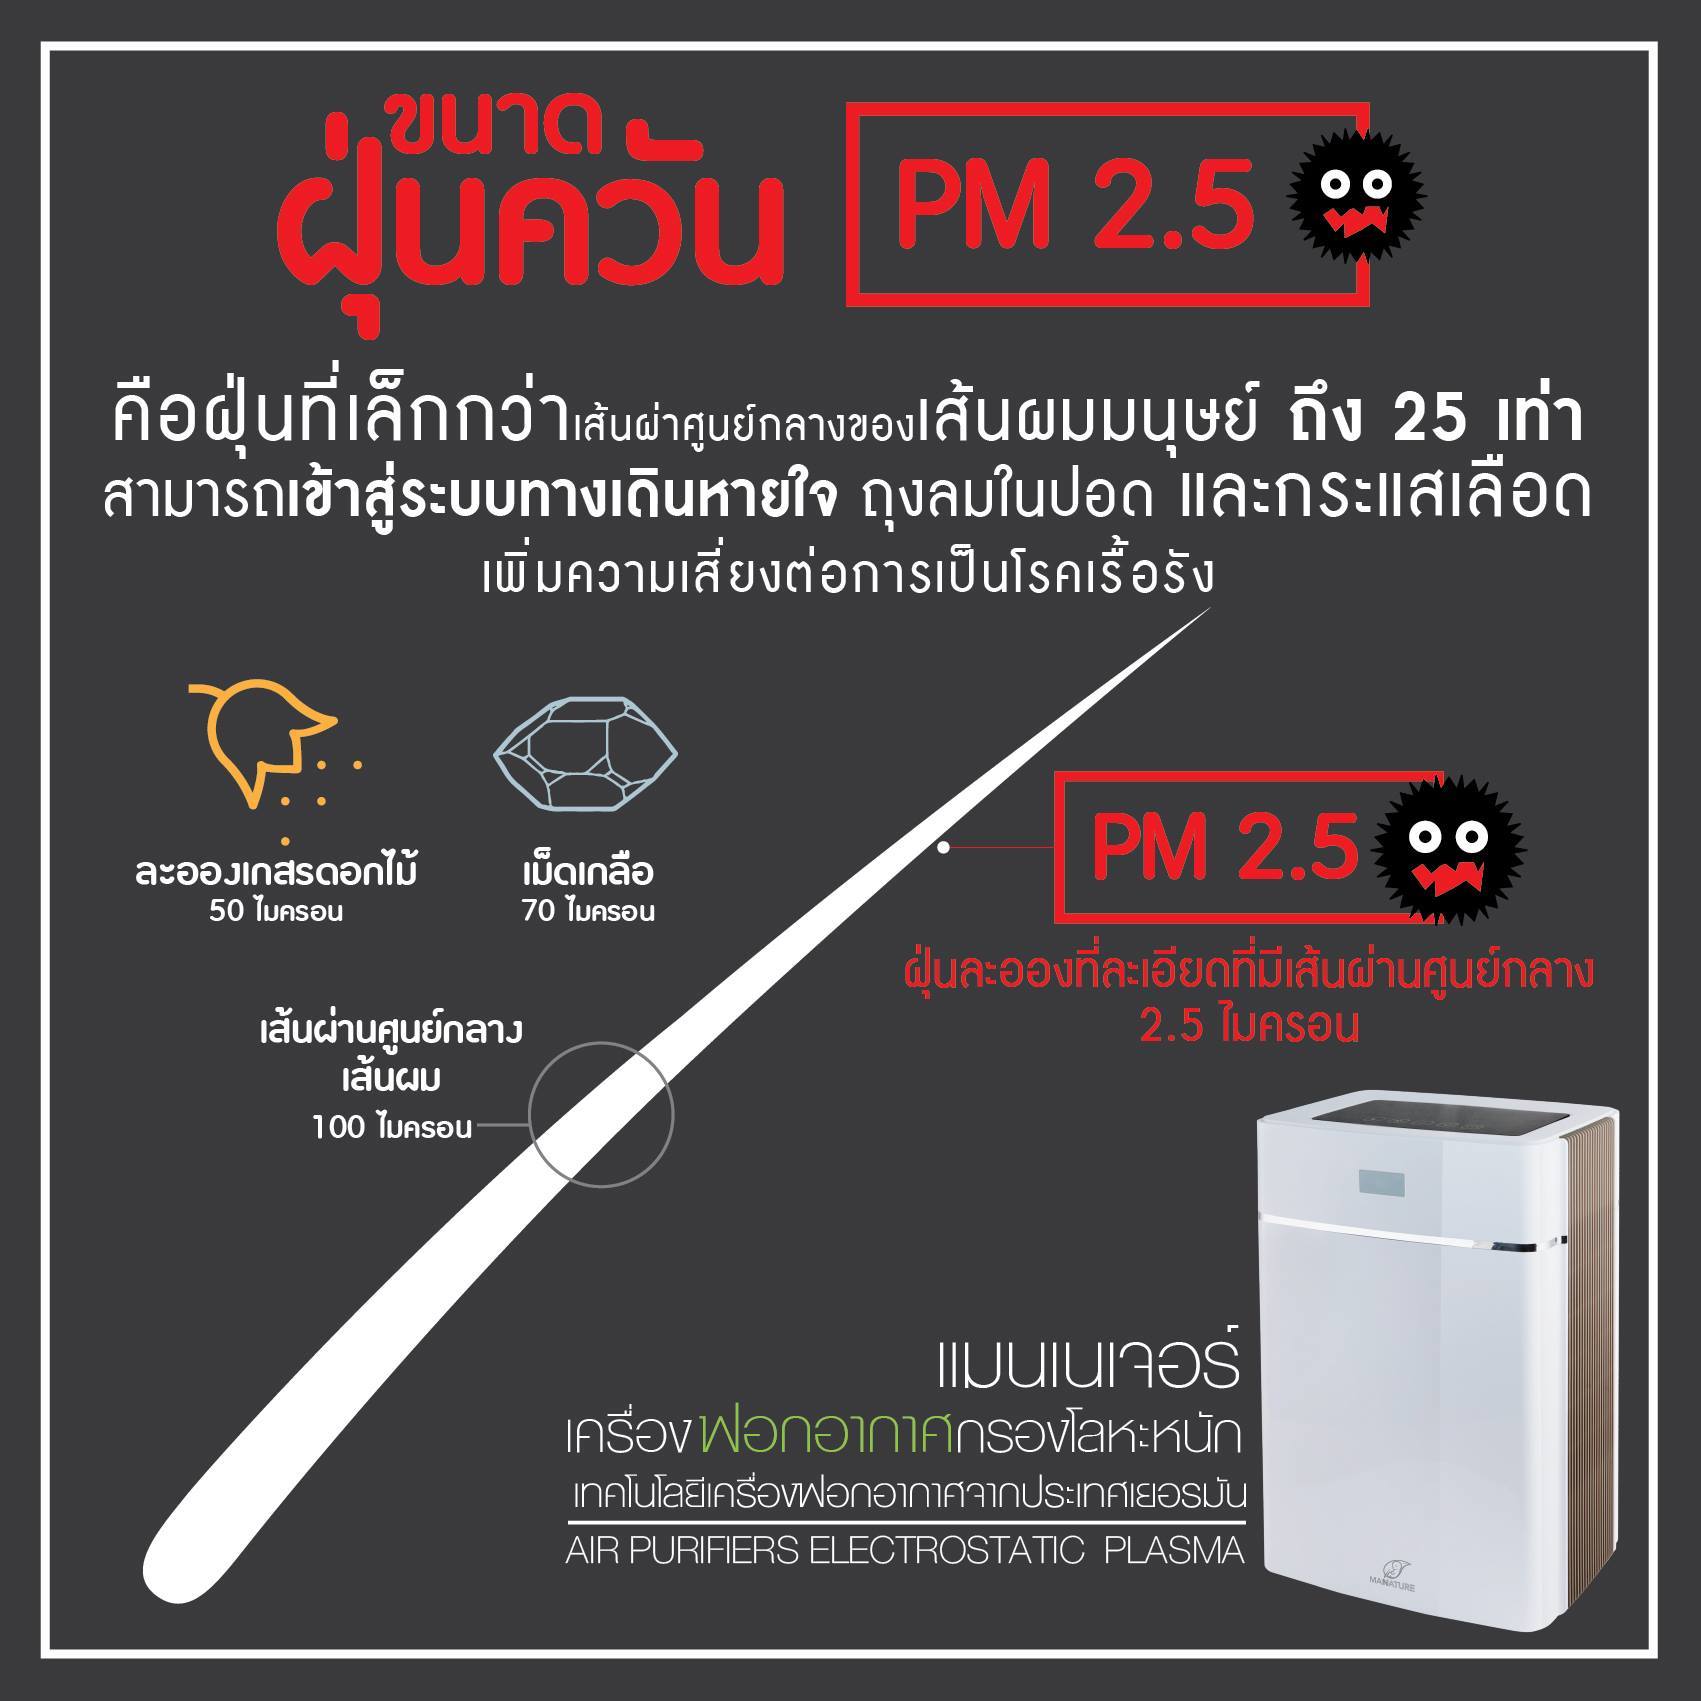 PM 2.5 ฝุ่นพิษ ภัยต่อสุขภาพ